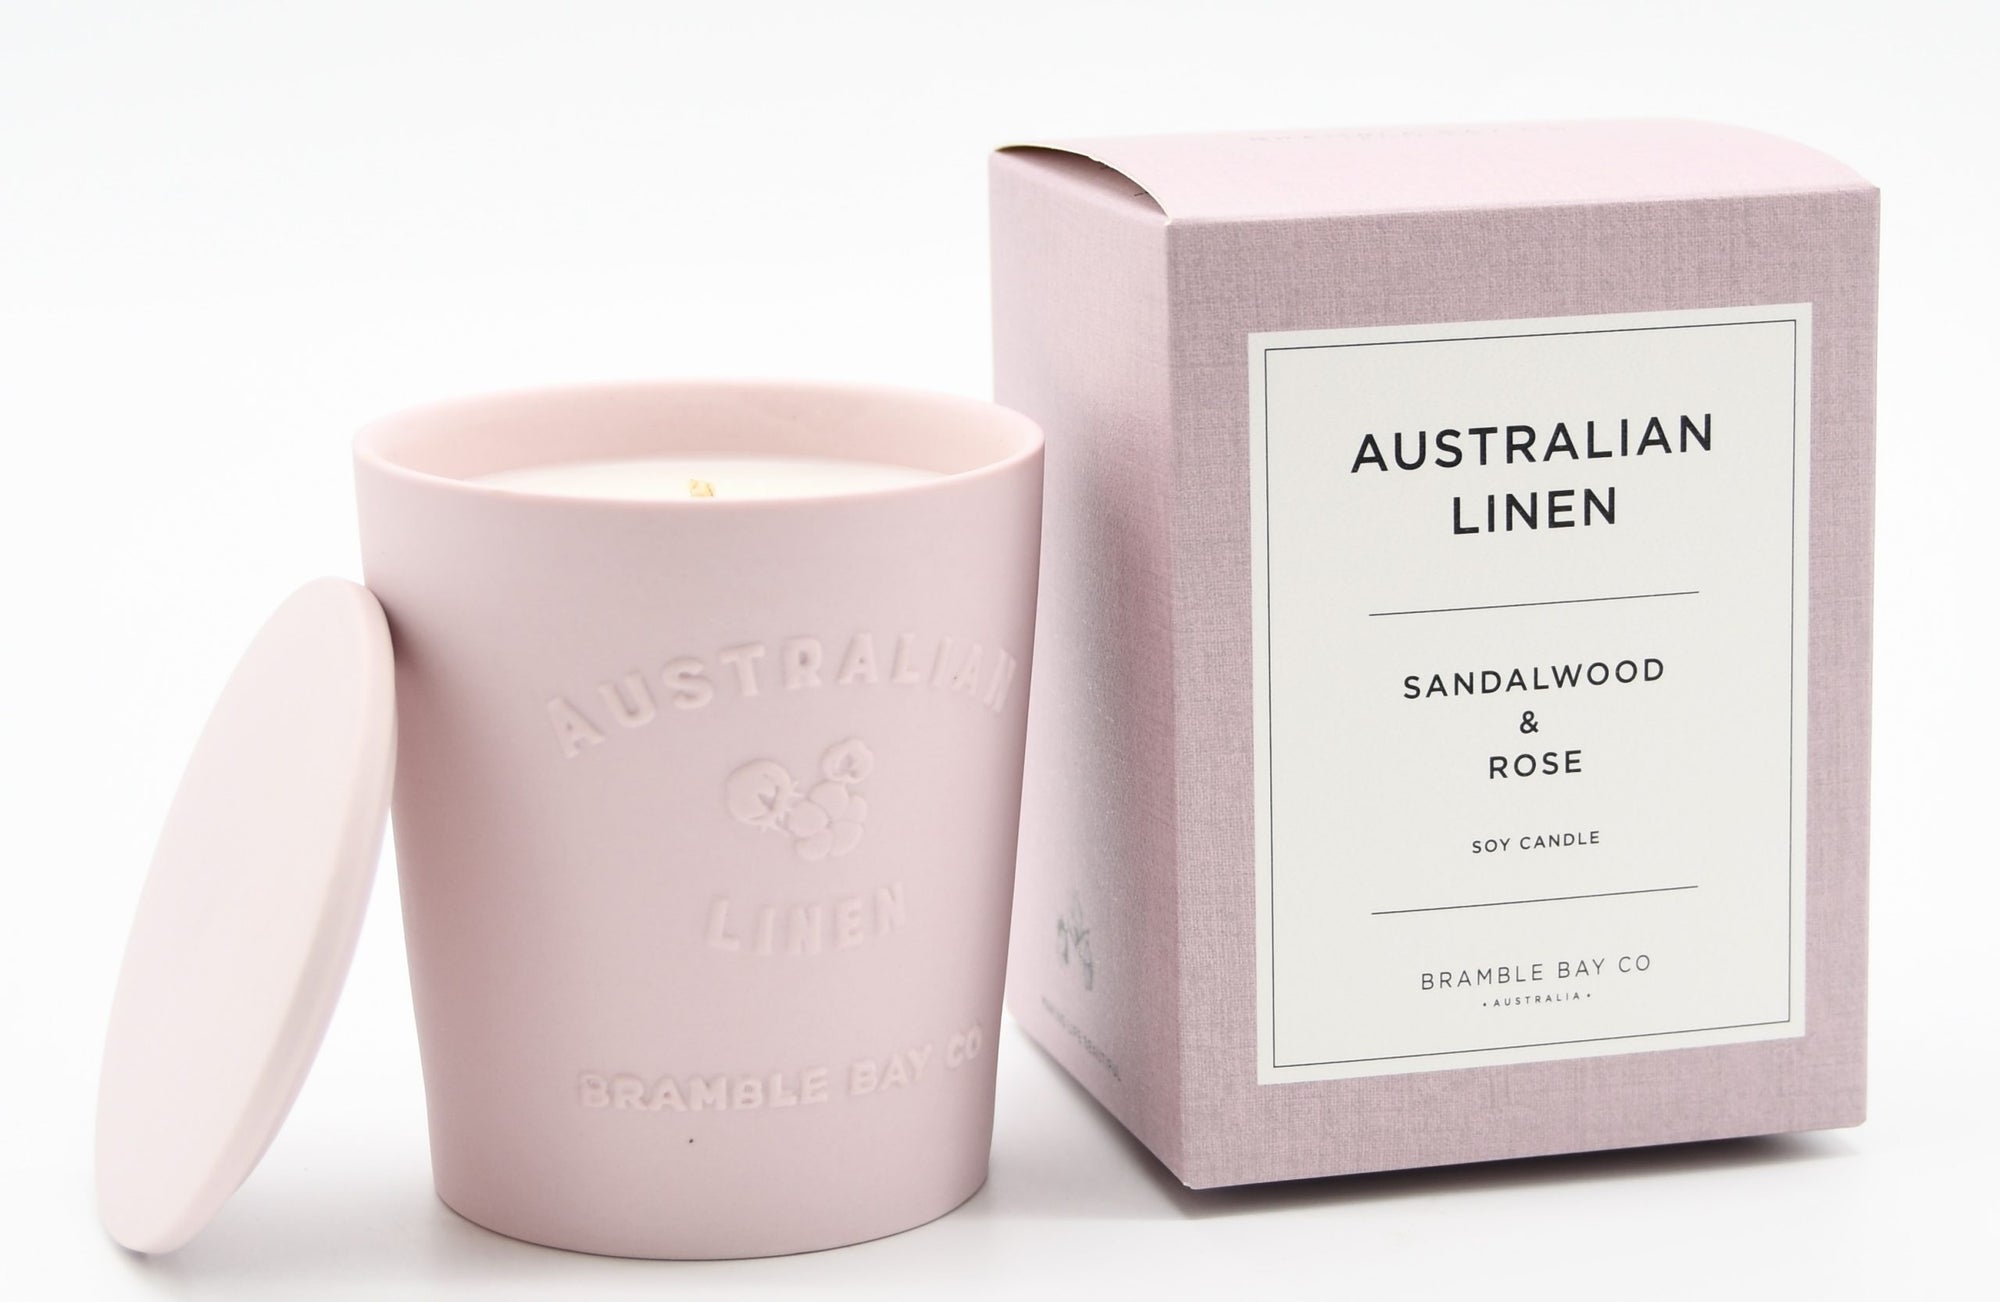 Bramble Bay Co Candle Australian Linen 300g Sandalwood and Rose